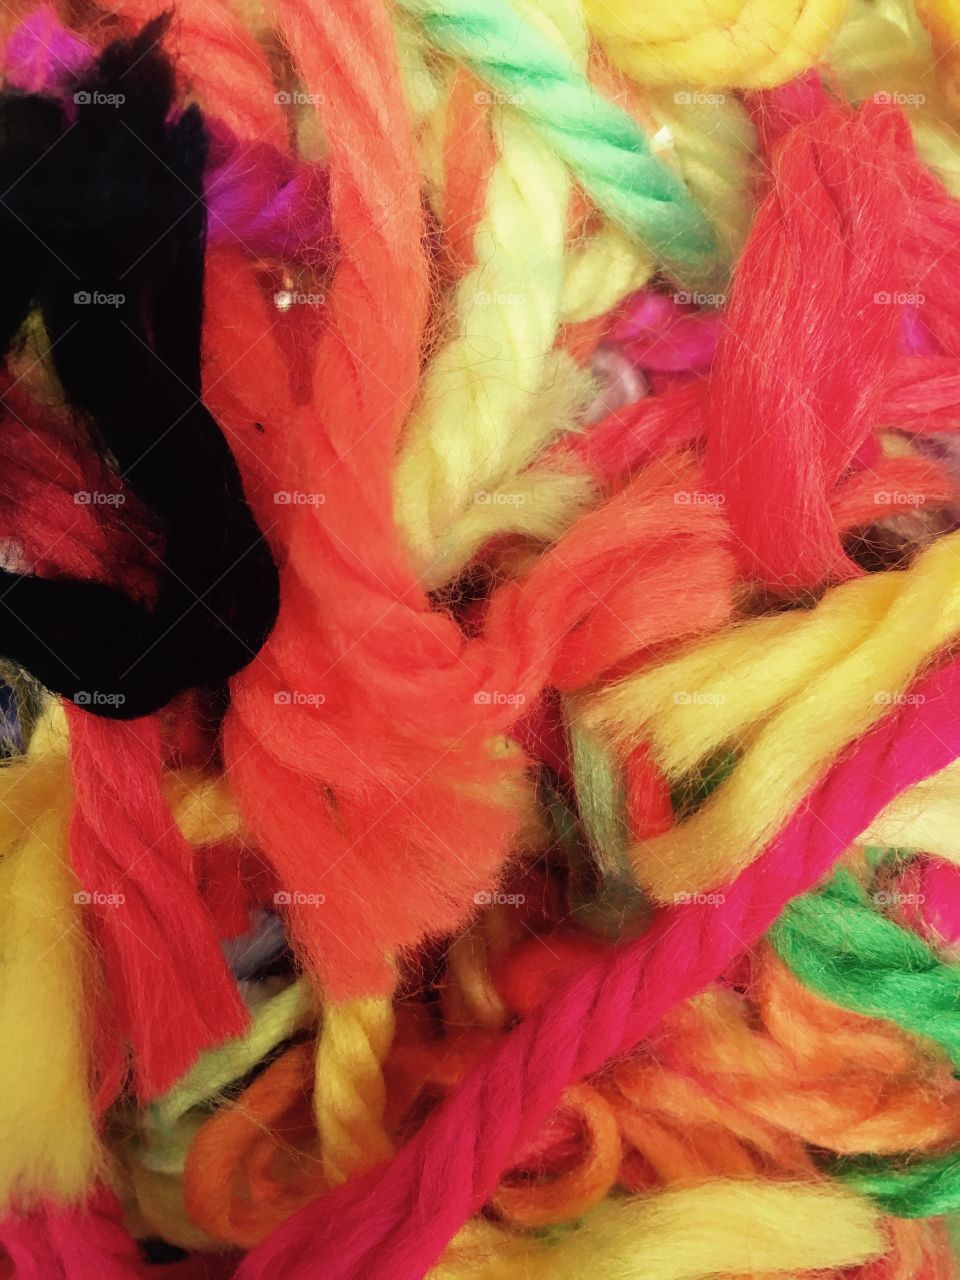 Yarn scrapes in bright colors